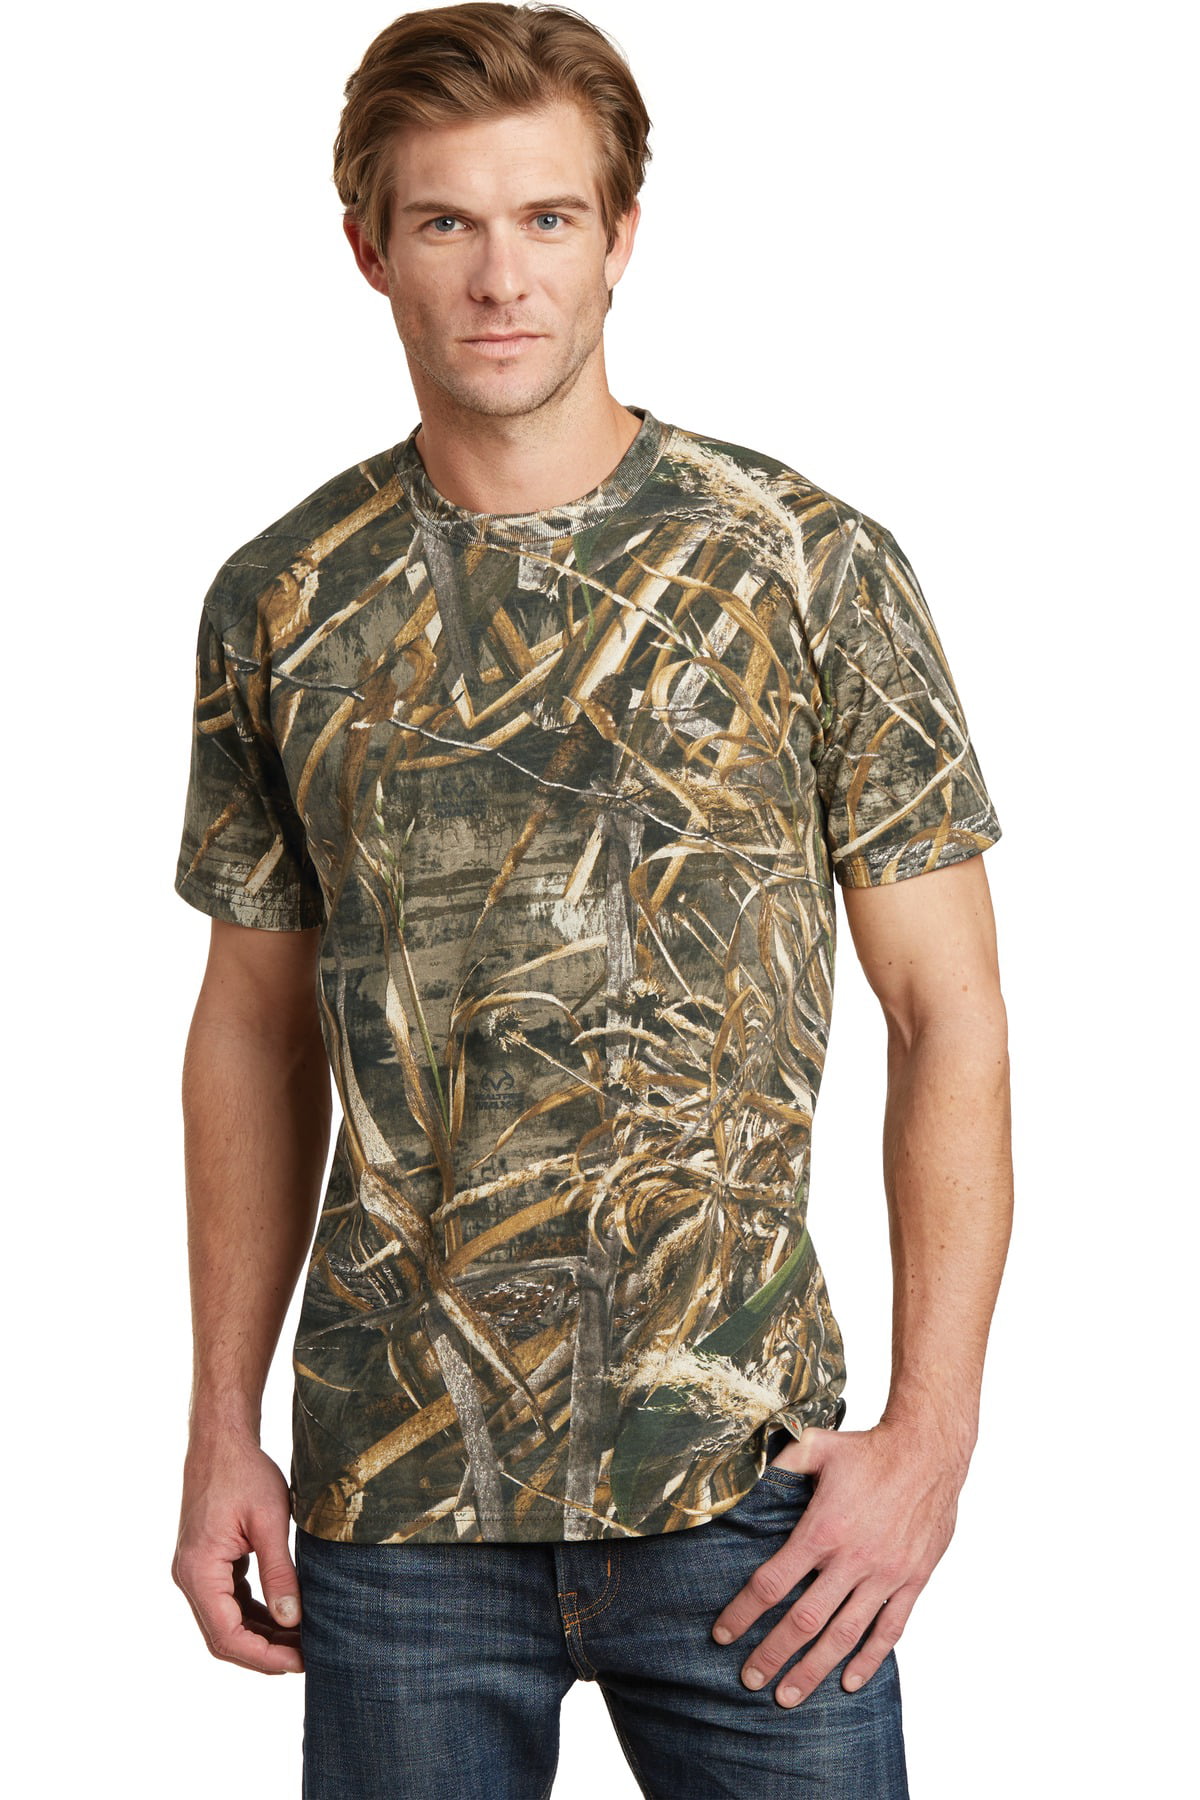 Russell Mens Camo T-Shirt Realtree Xtra Max 5 AP Cotton Hunting S-XL 2X 3X NEW 